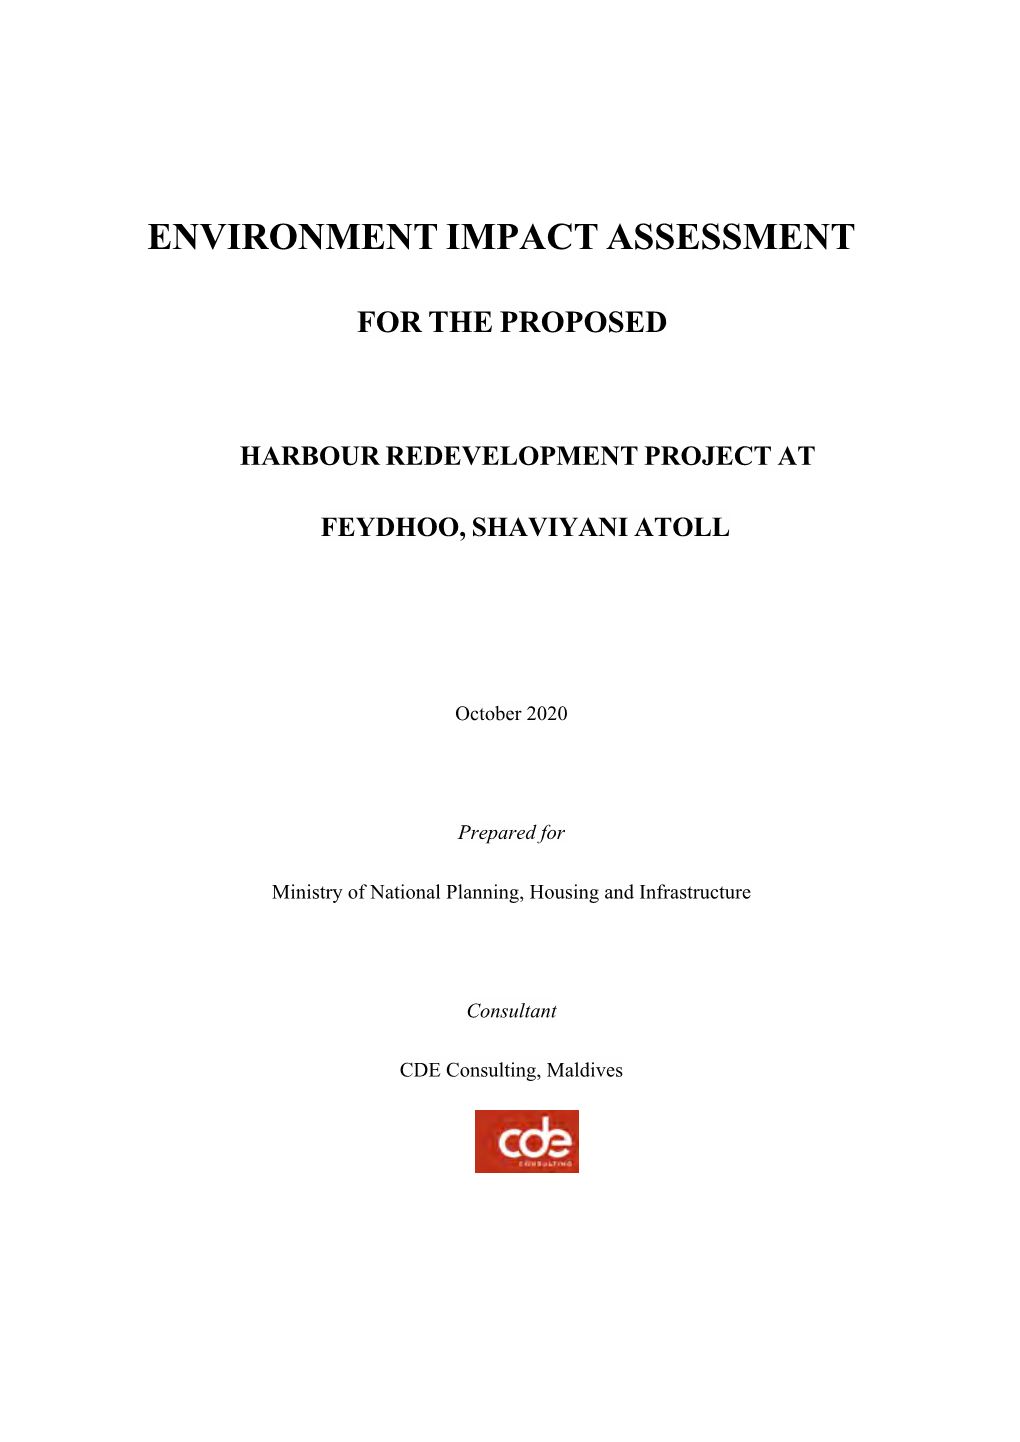 Environment Impact Assessment For